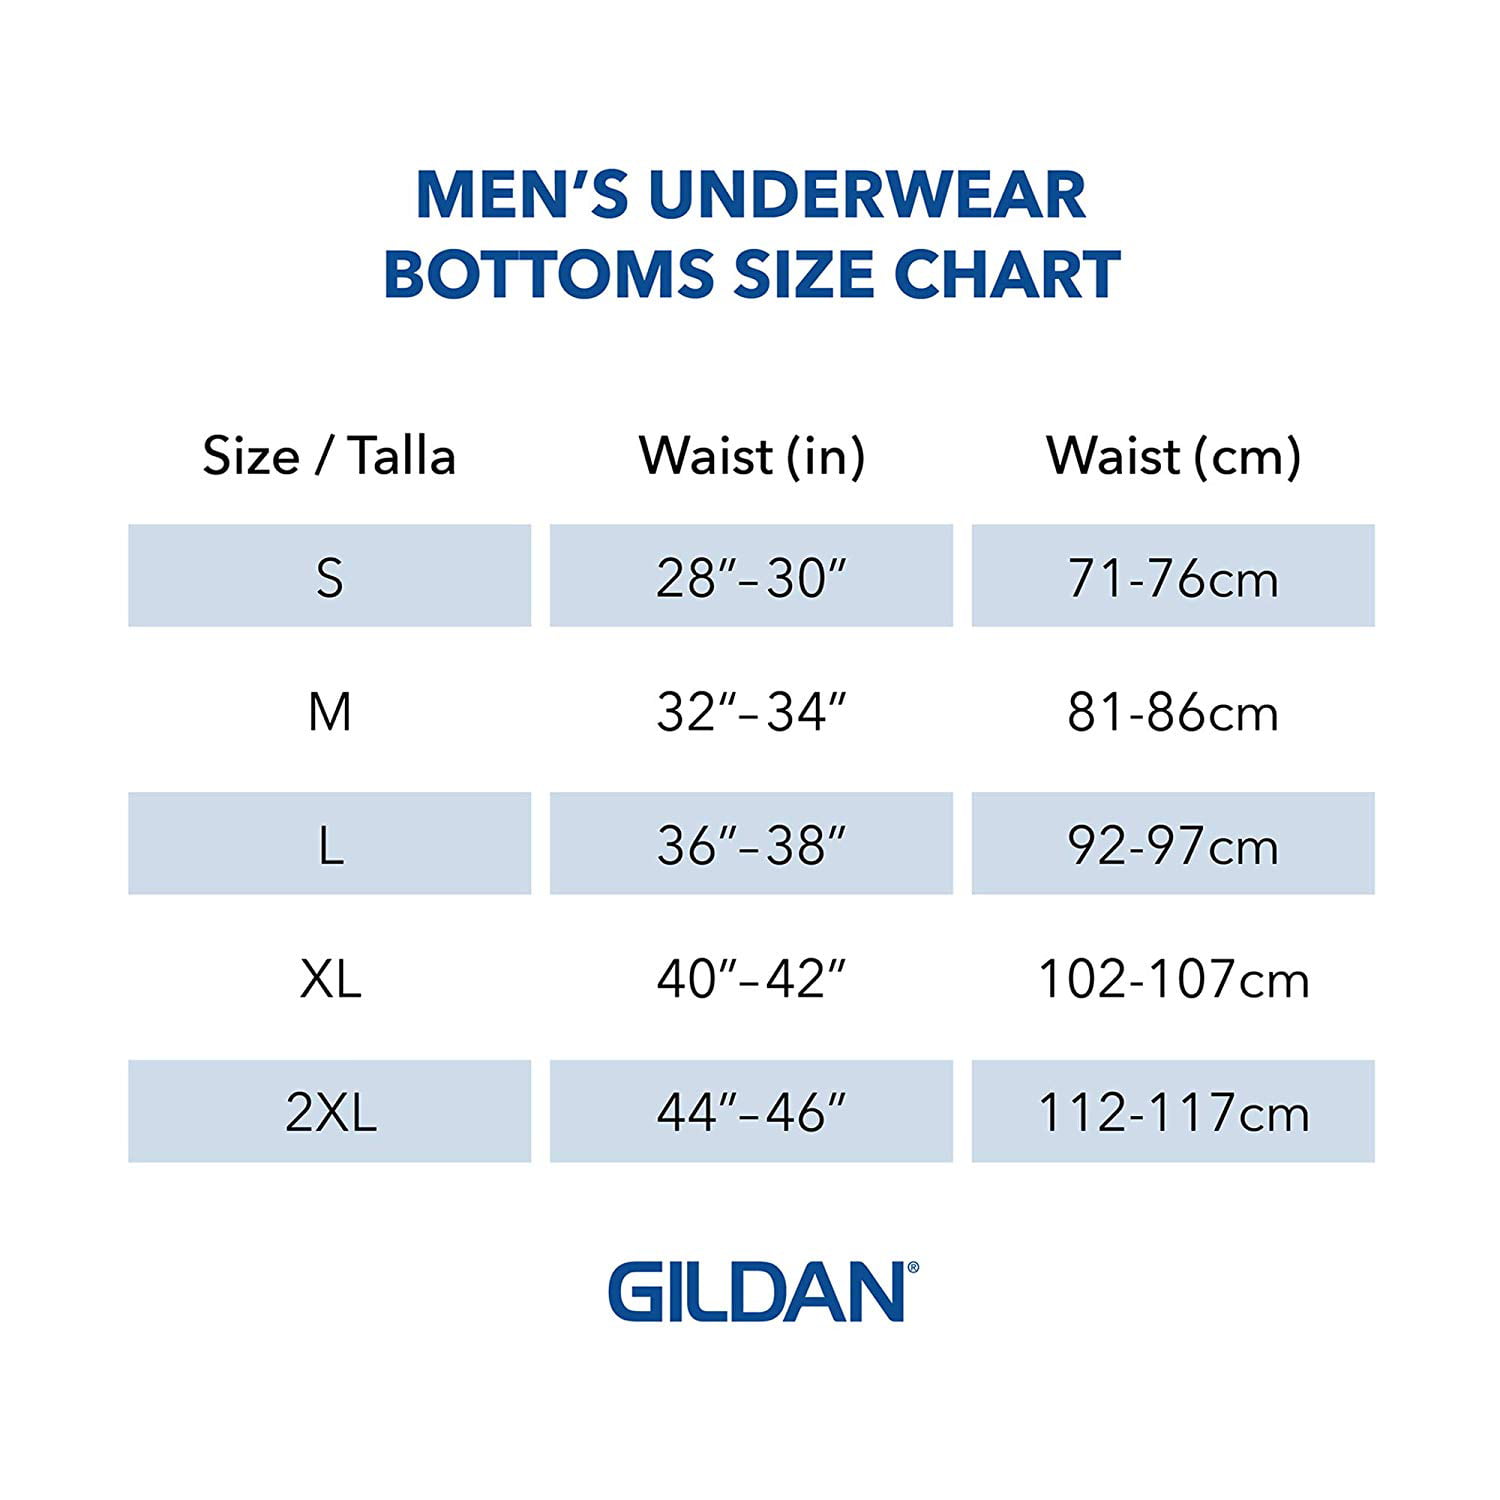 Gildan Men's Regular Leg Boxer Brief Multipack, Black (5, Black, Size Medium